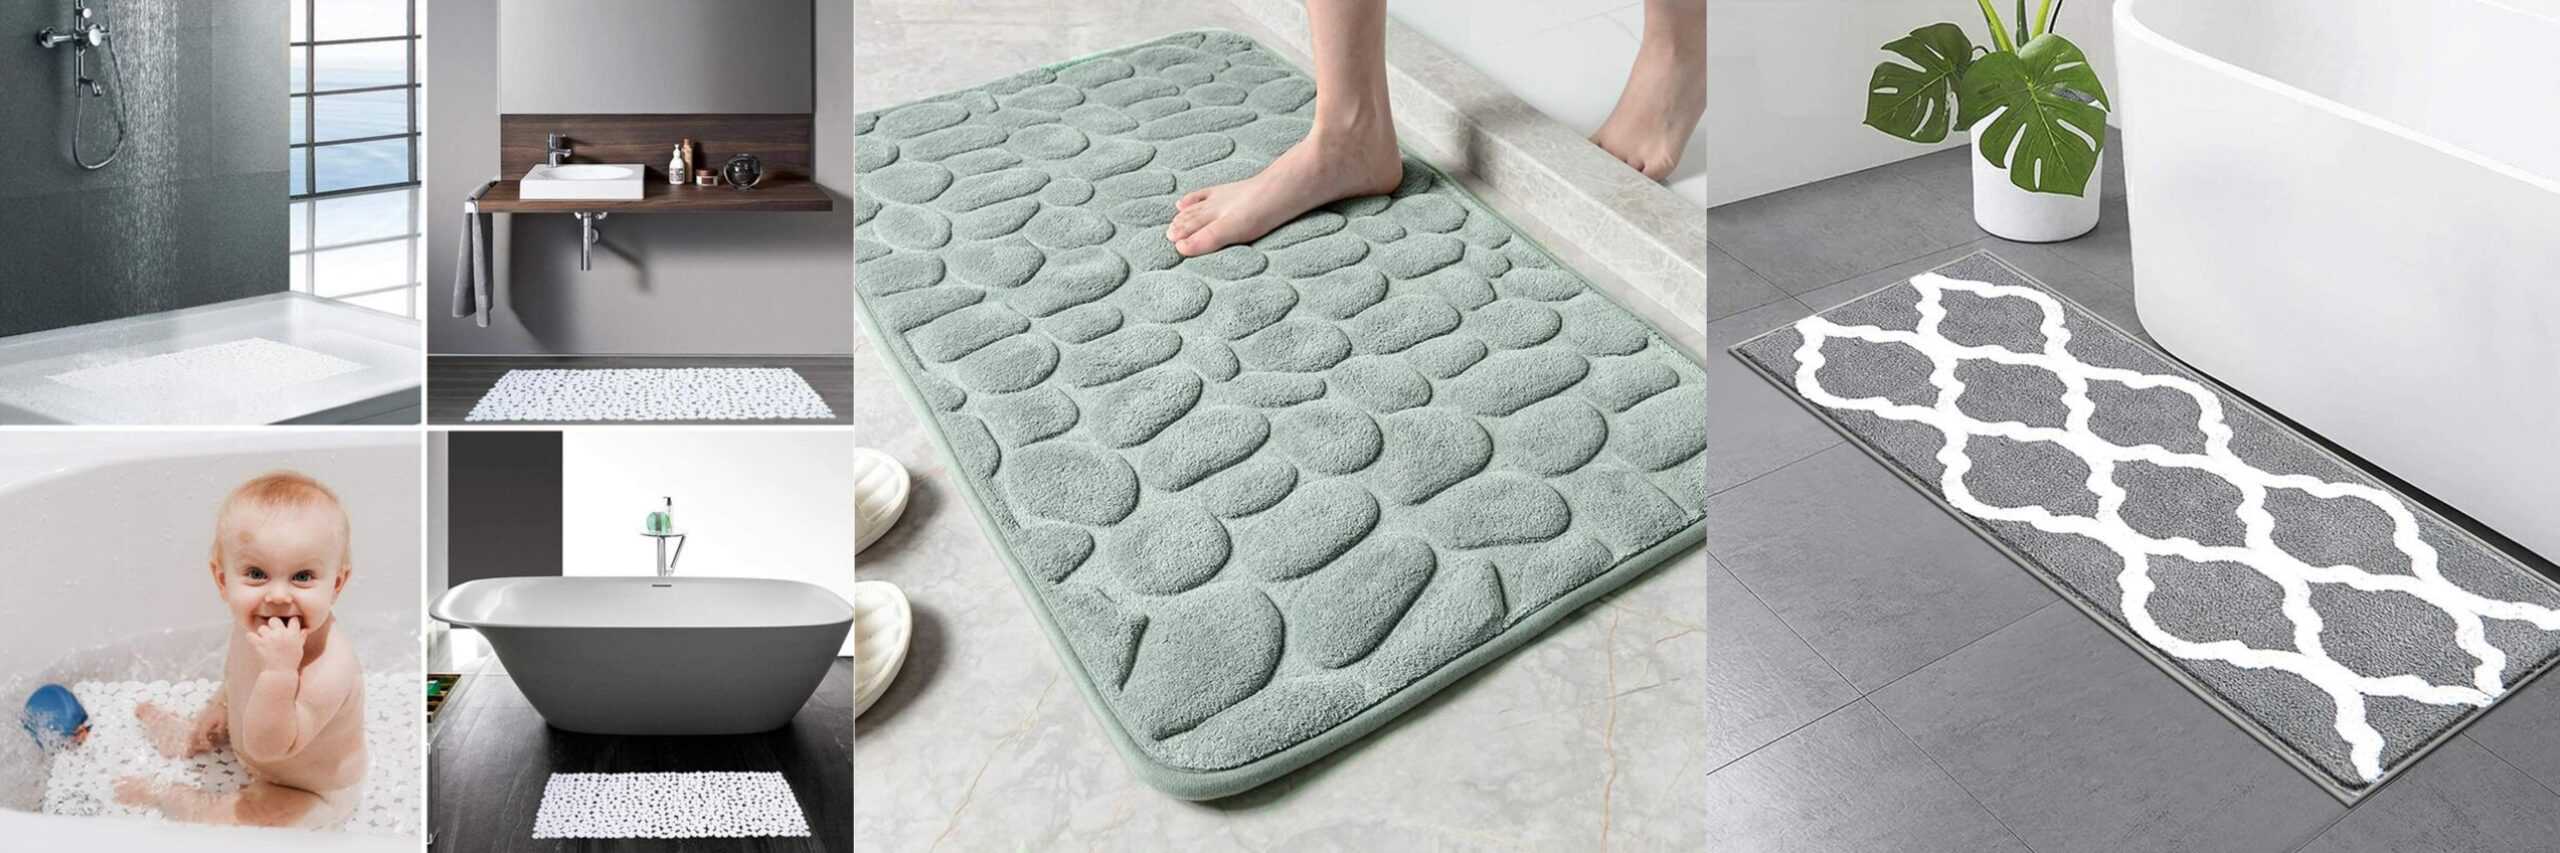 Evideco 3D Cobble Stone Shaped Memory Foam Bath Mat Microfiber Non Slip - Dark Gray